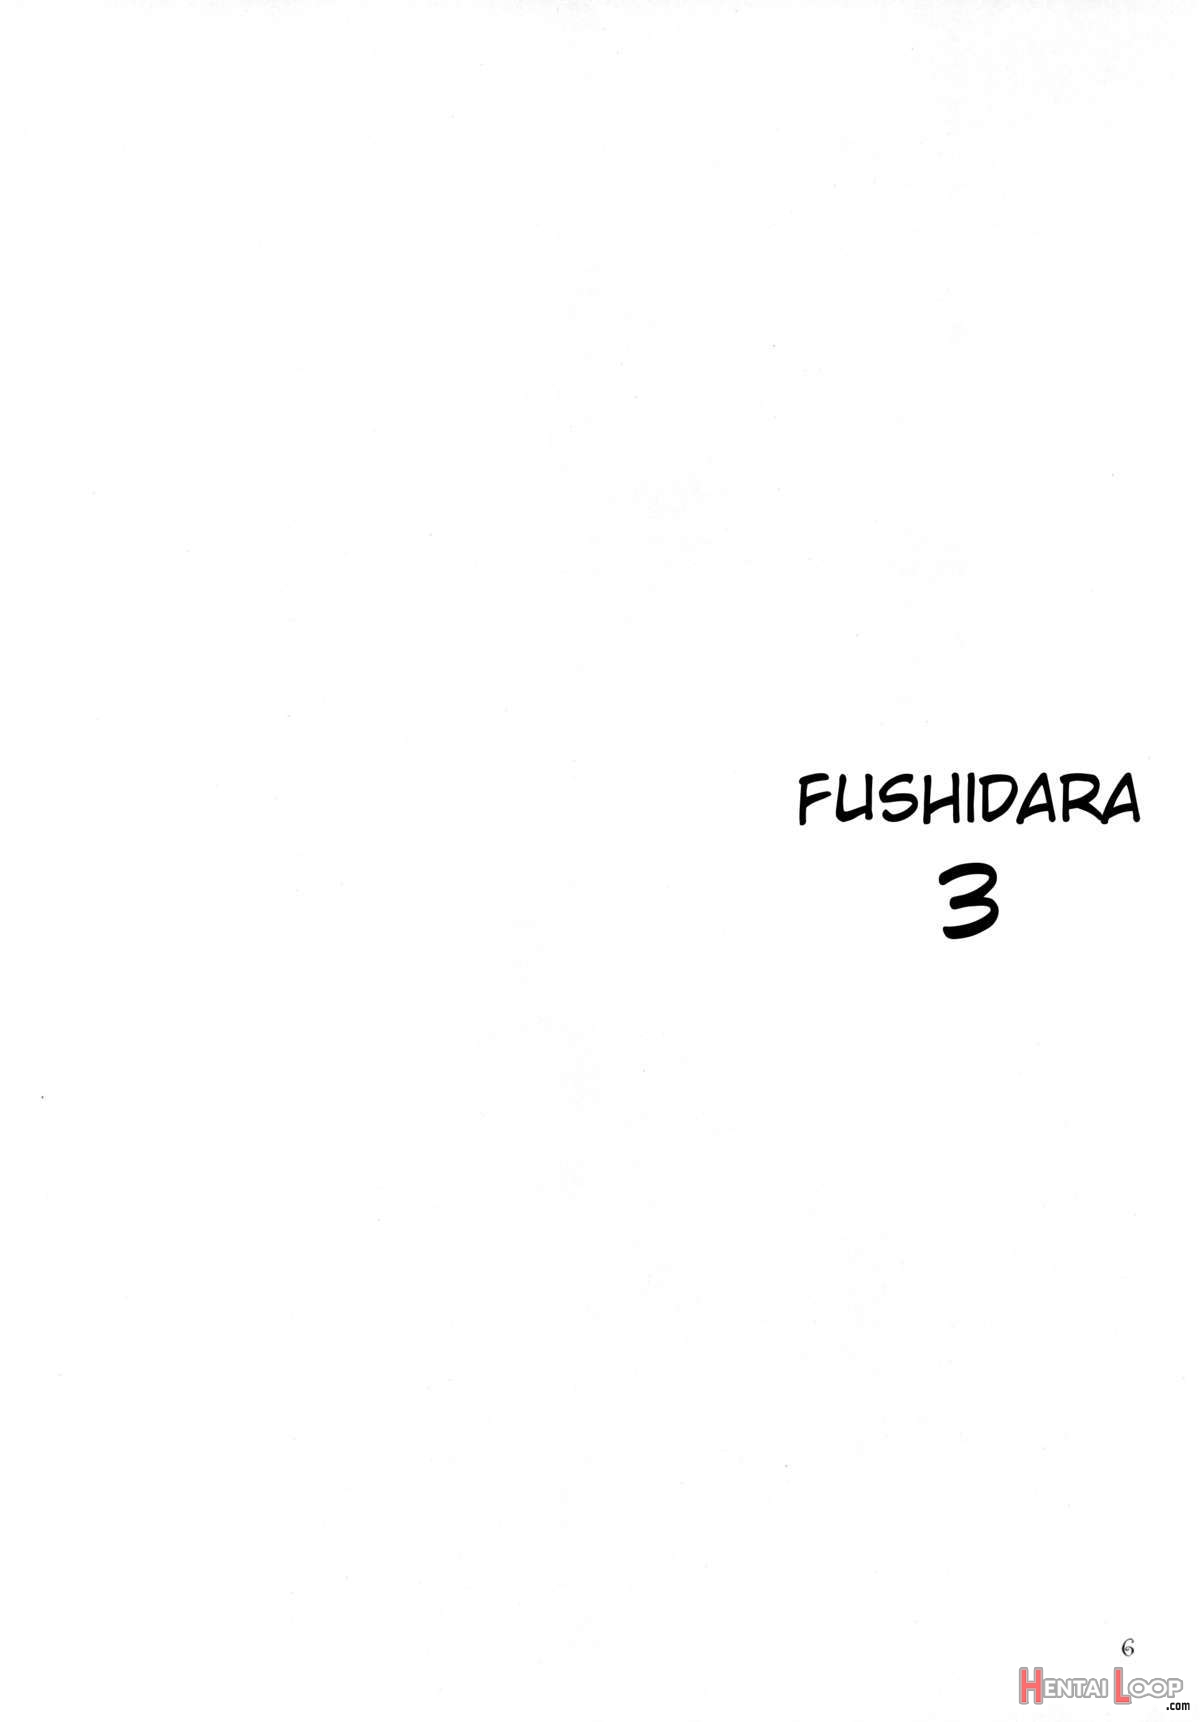 Fushidara Vs Yokoshima 3 page 3